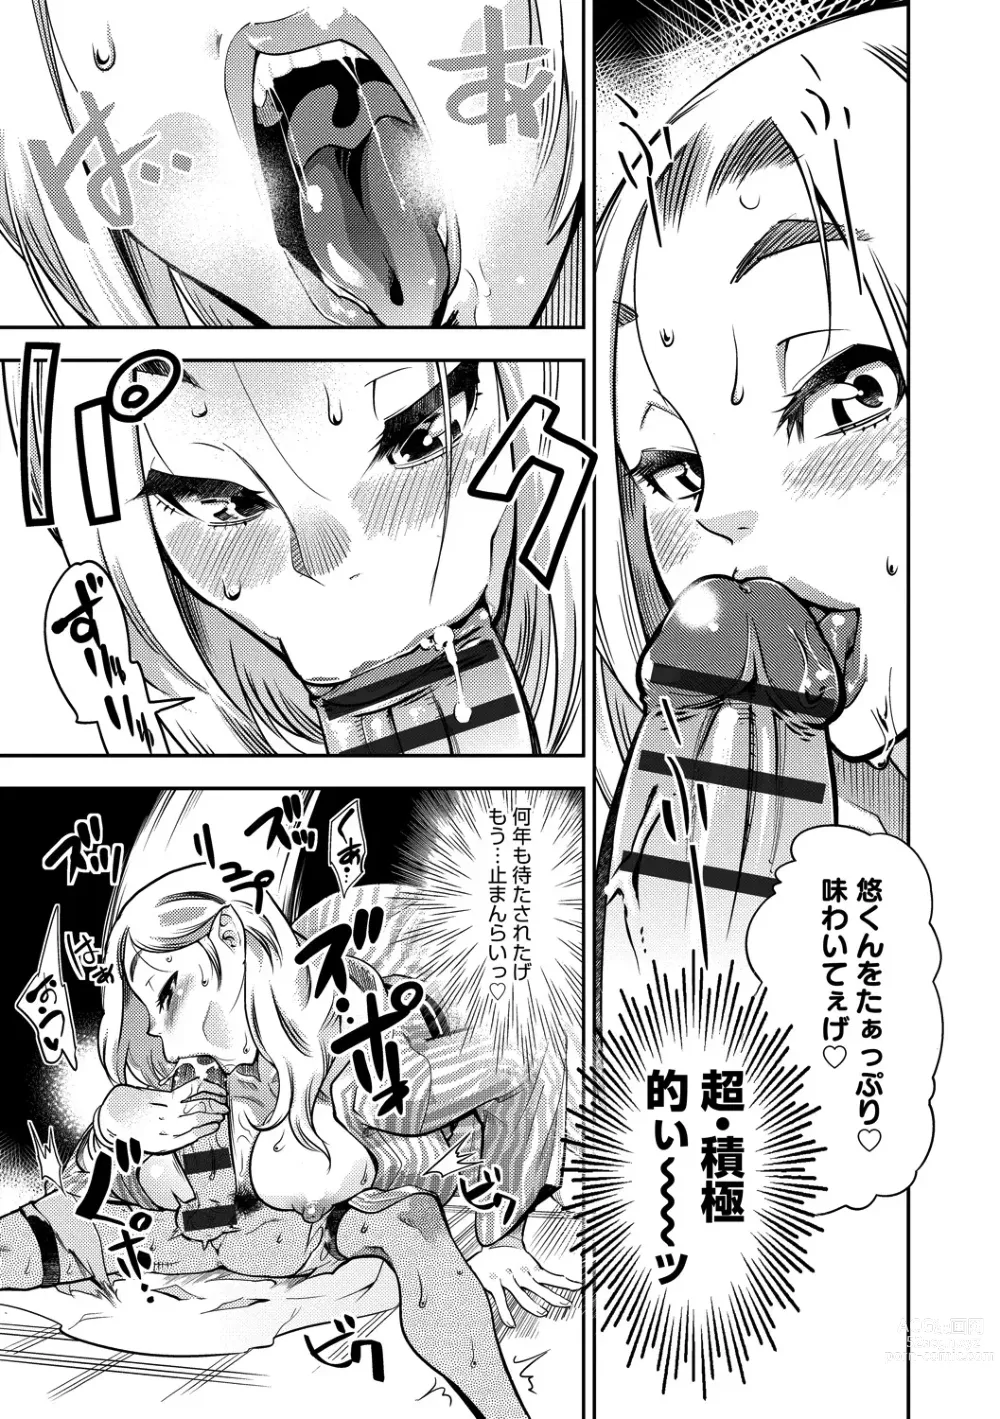 Page 17 of manga Hamekko 3Peace!!!